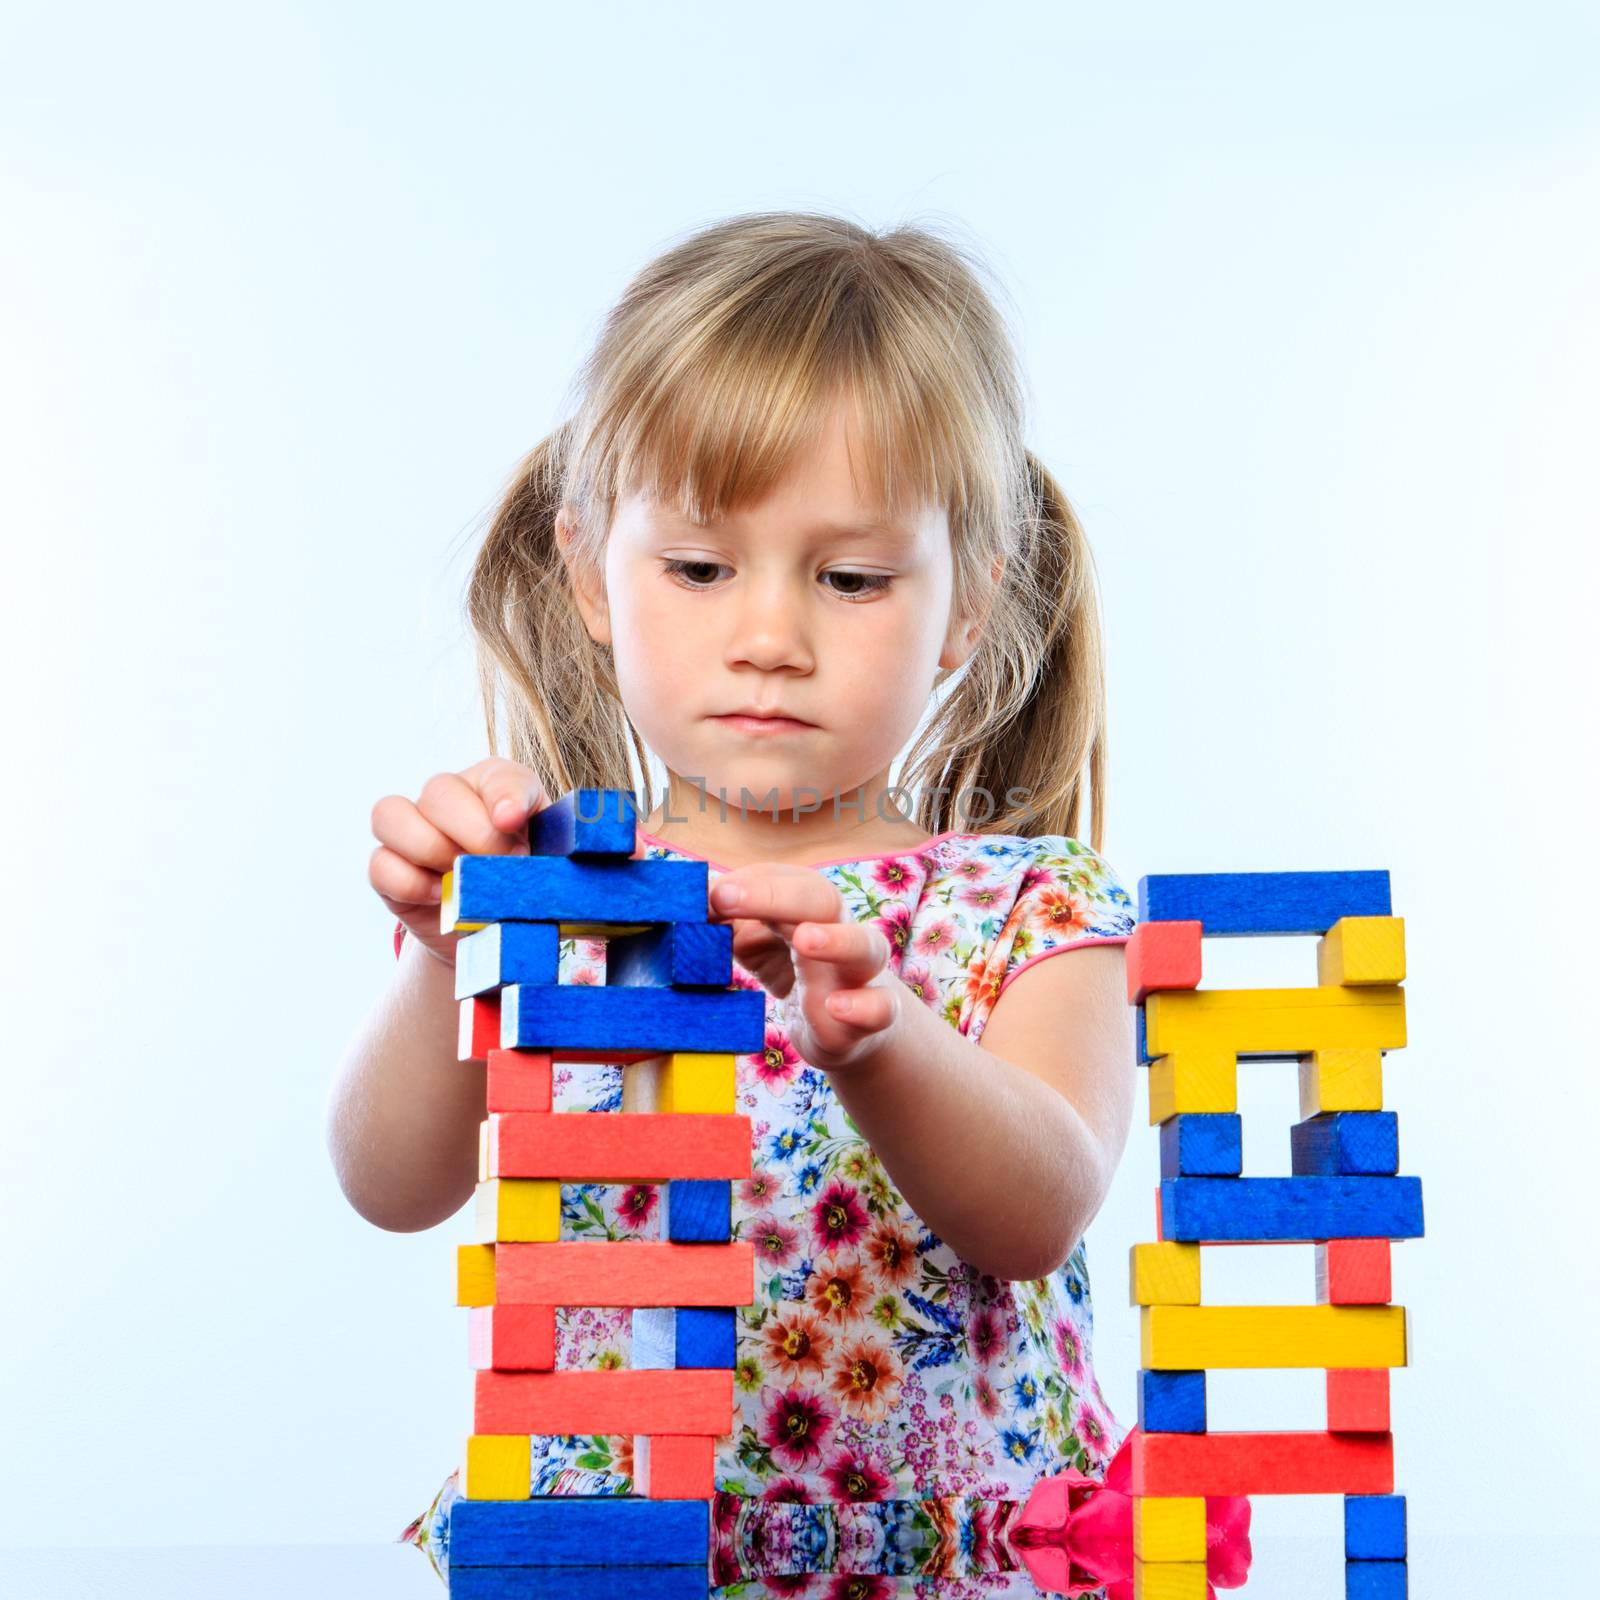 Close up portrait of infant building structure with color wooden blocks.